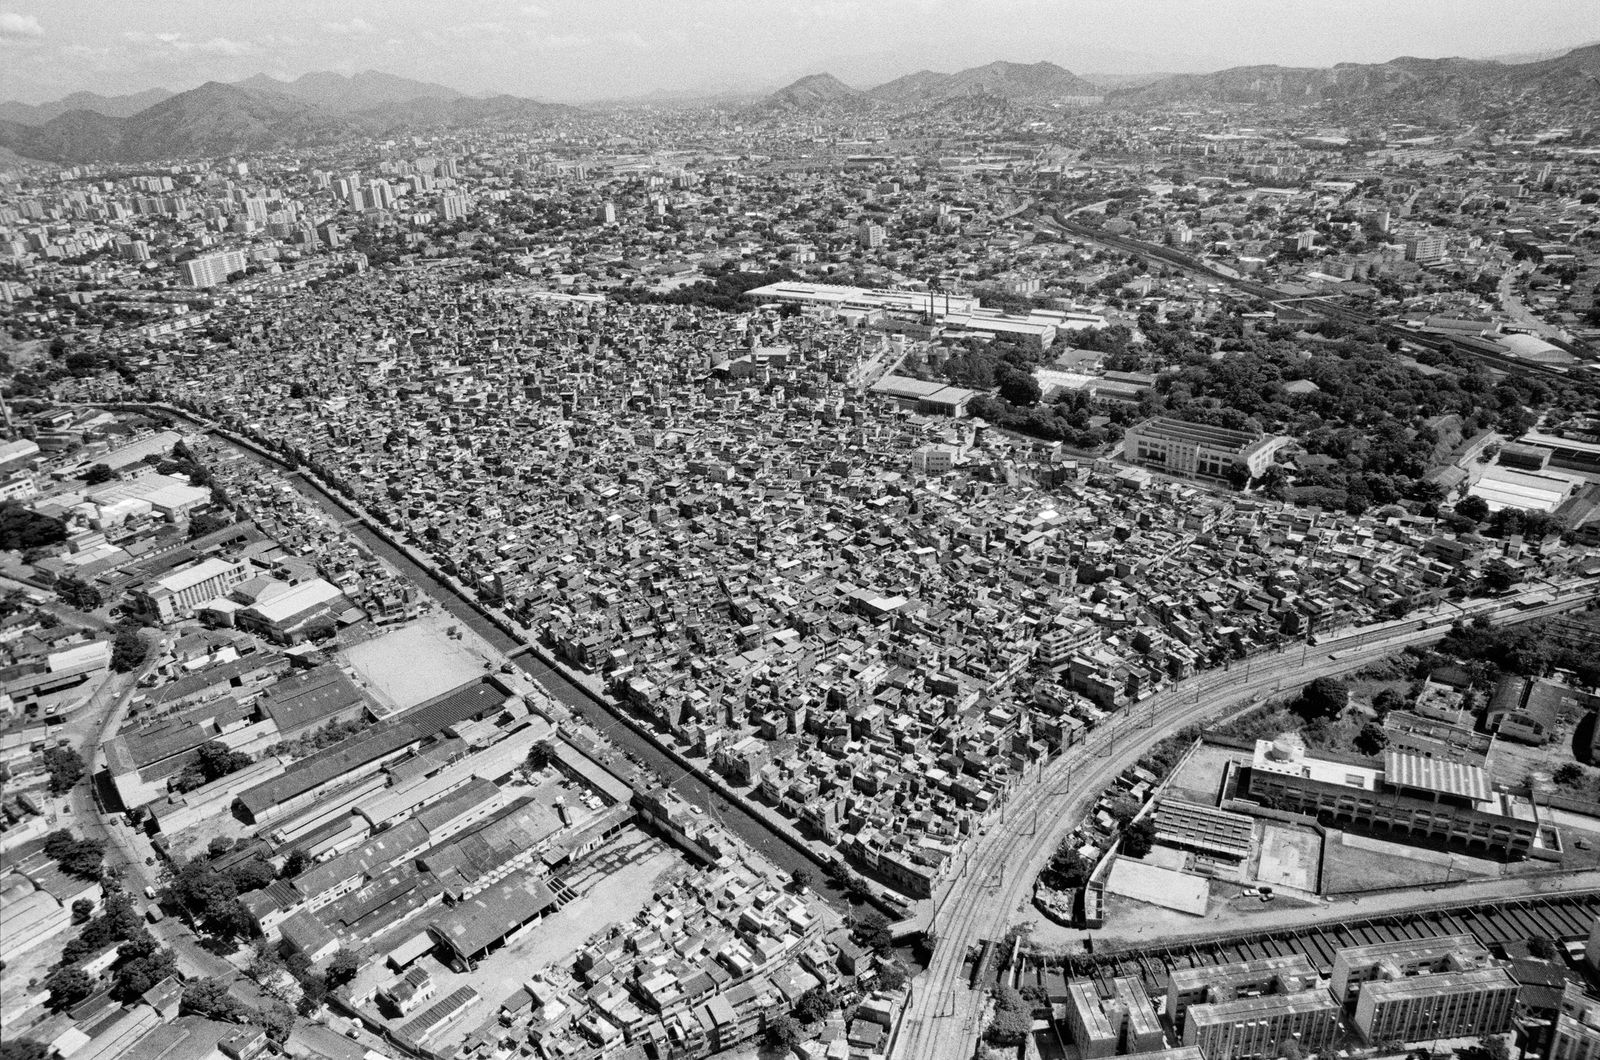 005 - Favelas do Rio by Andre Cypriano.jpg